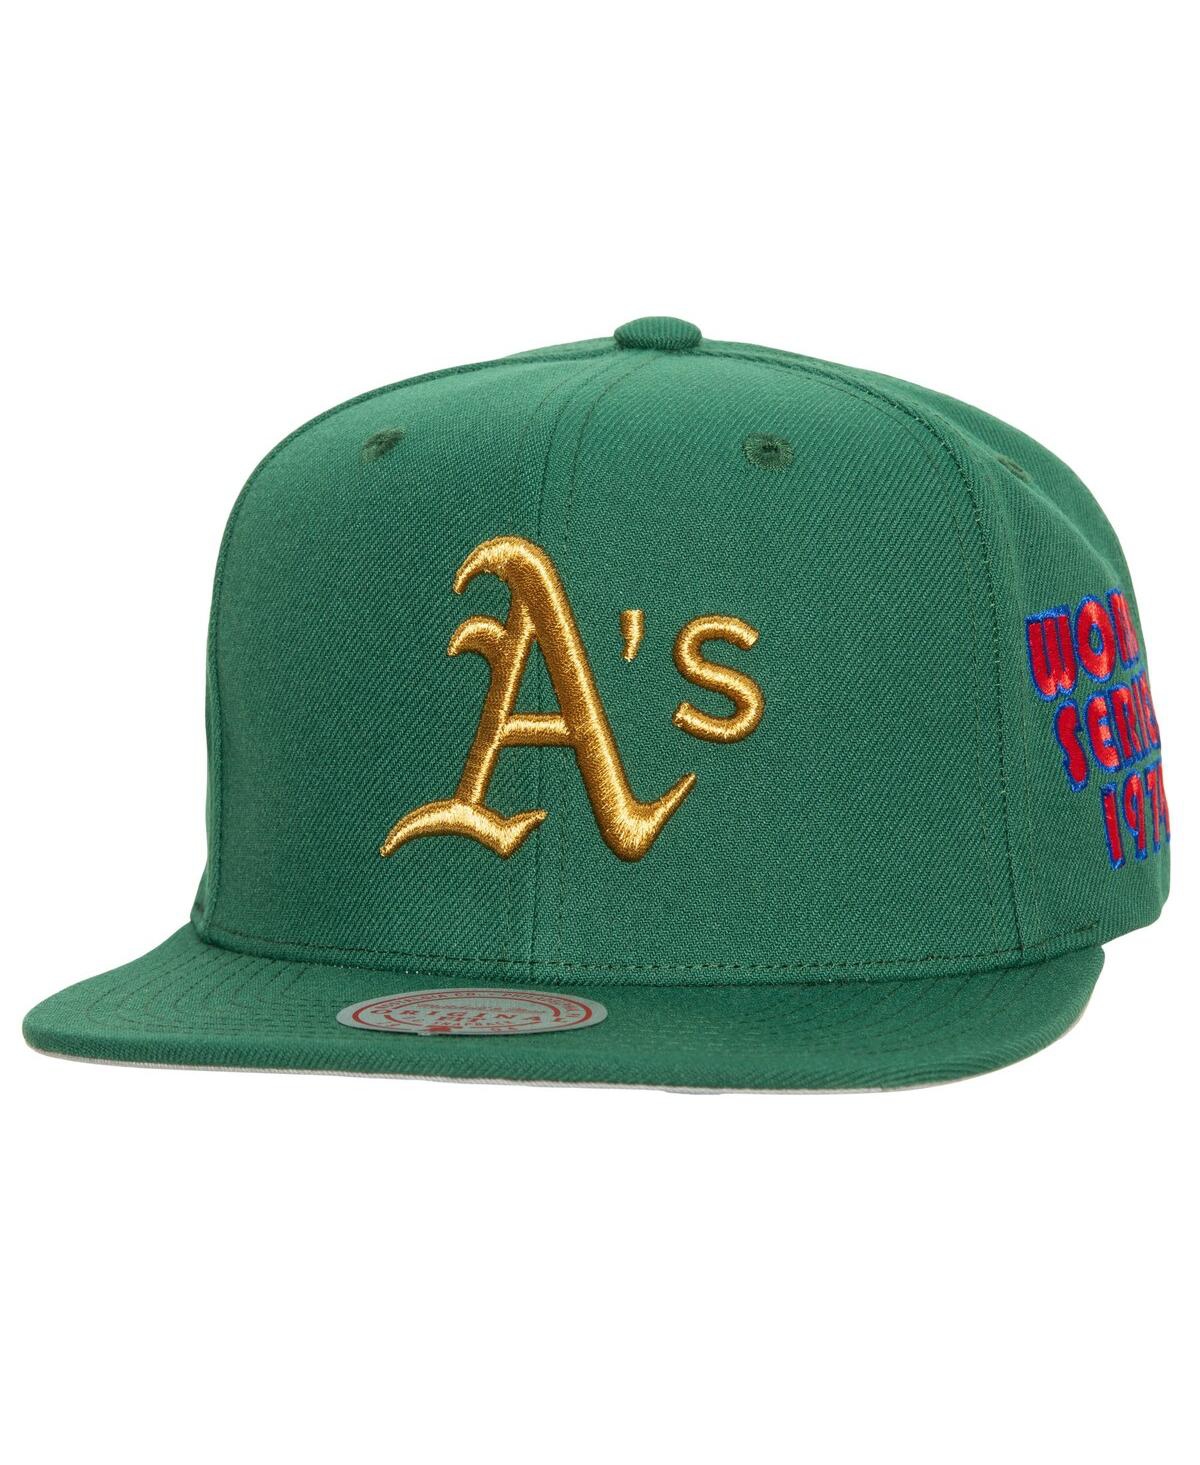 Mitchell & Ness Men's  Green Oakland Athletics Champ'd Up Snapback Hat